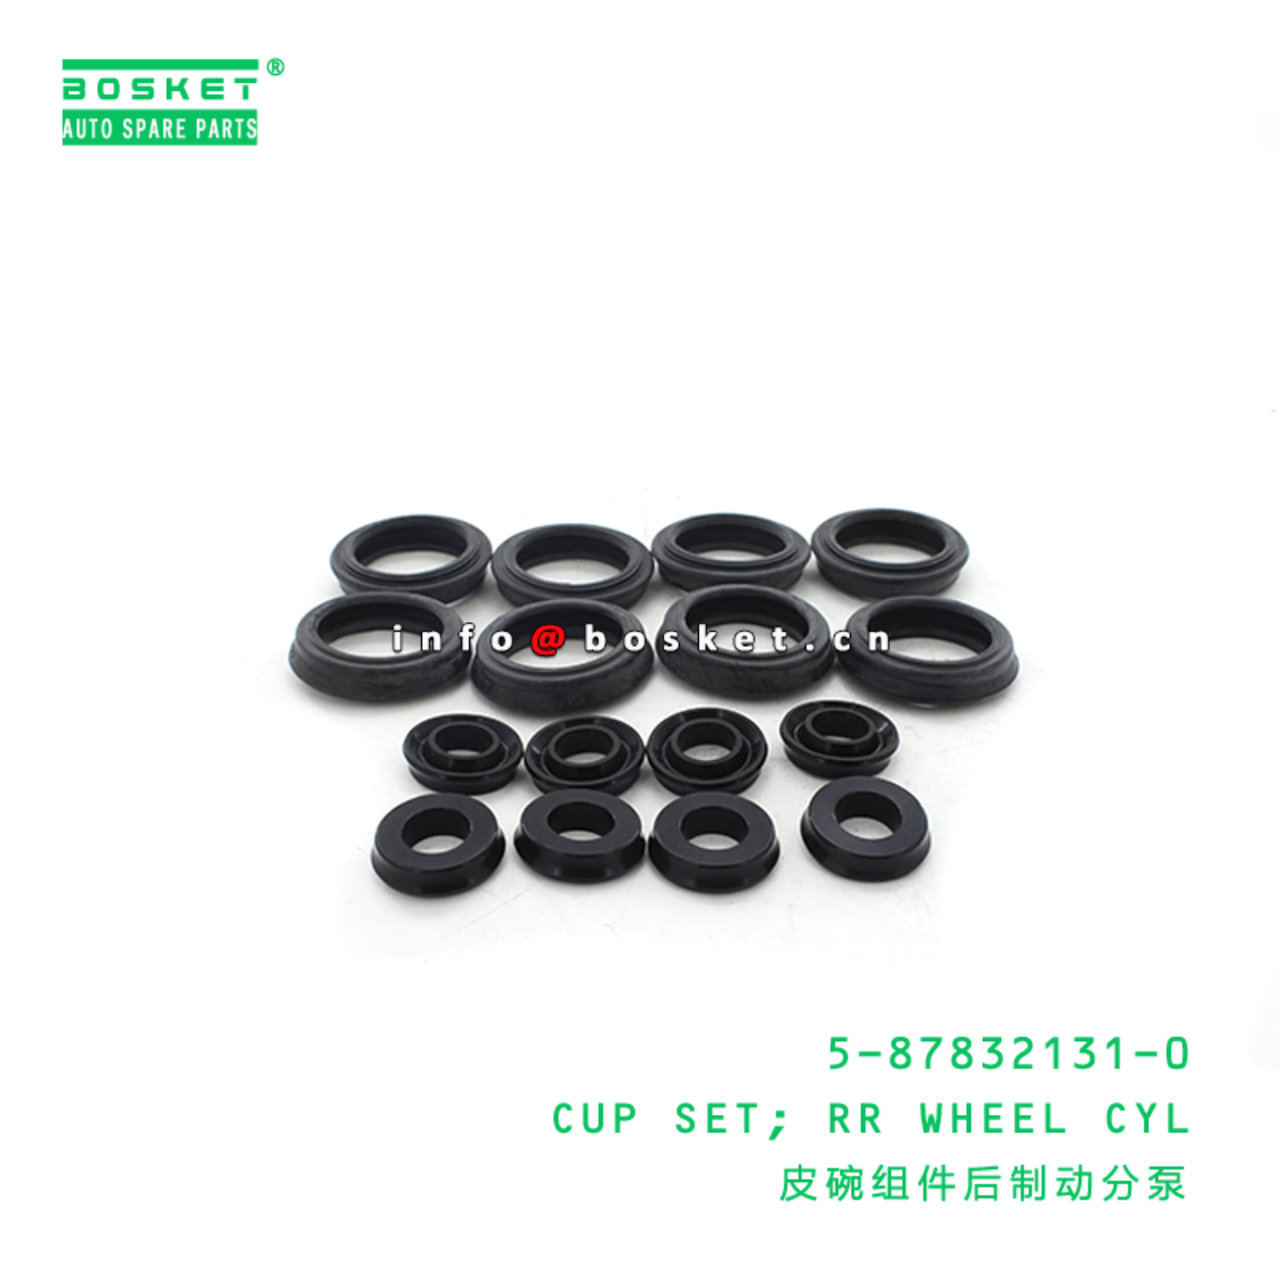 5-87832131-0 Rear Wheel Cylinder Cup Set 5878321310 Suitable for ISUZU NPR